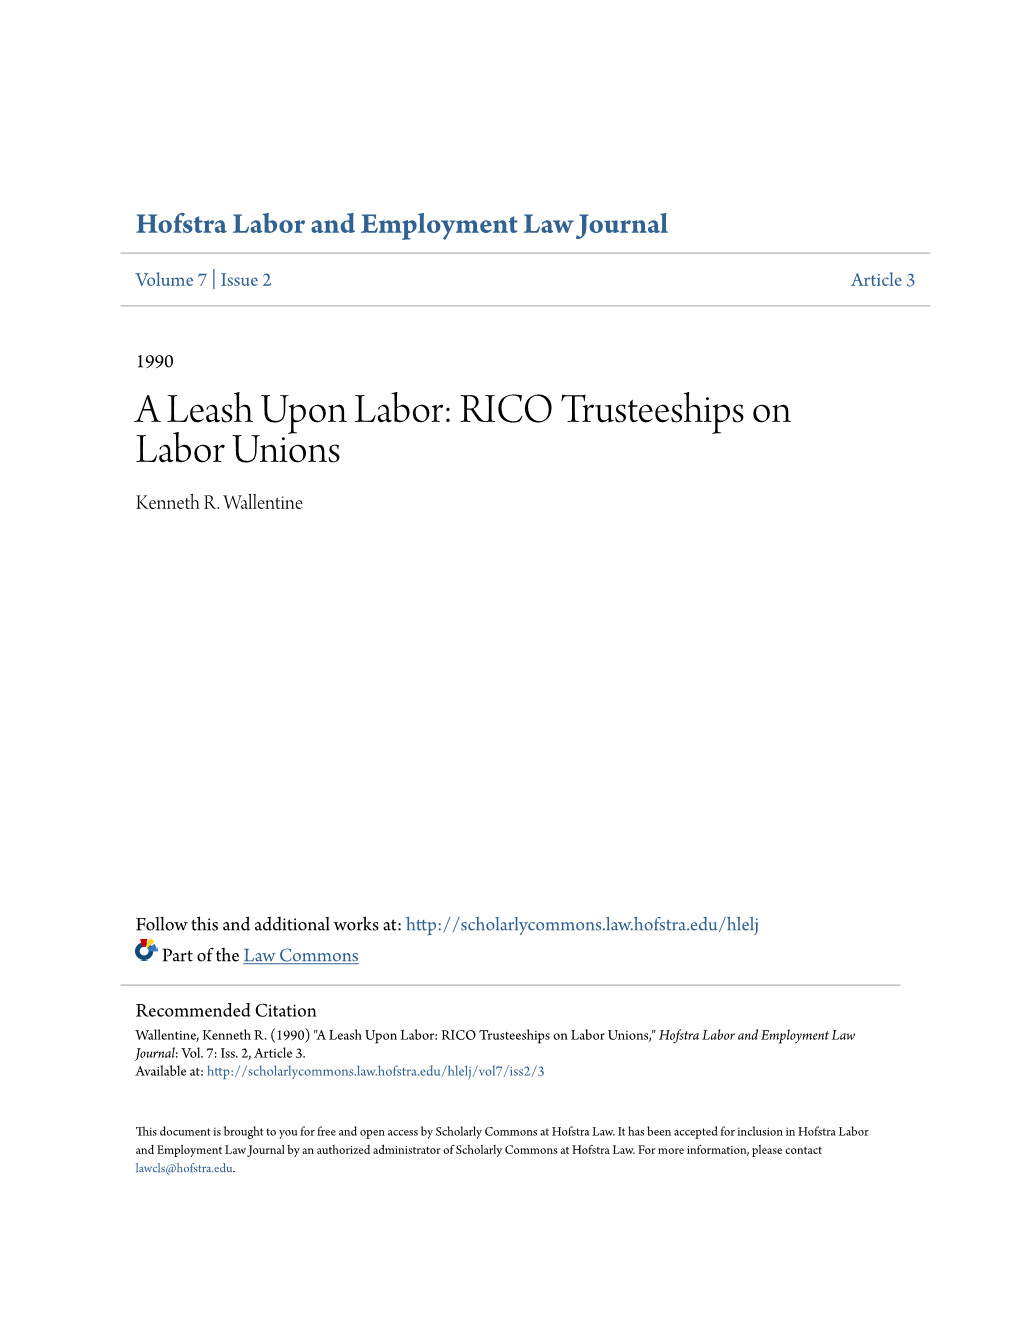 A Leash Upon Labor: RICO Trusteeships on Labor Unions Kenneth R